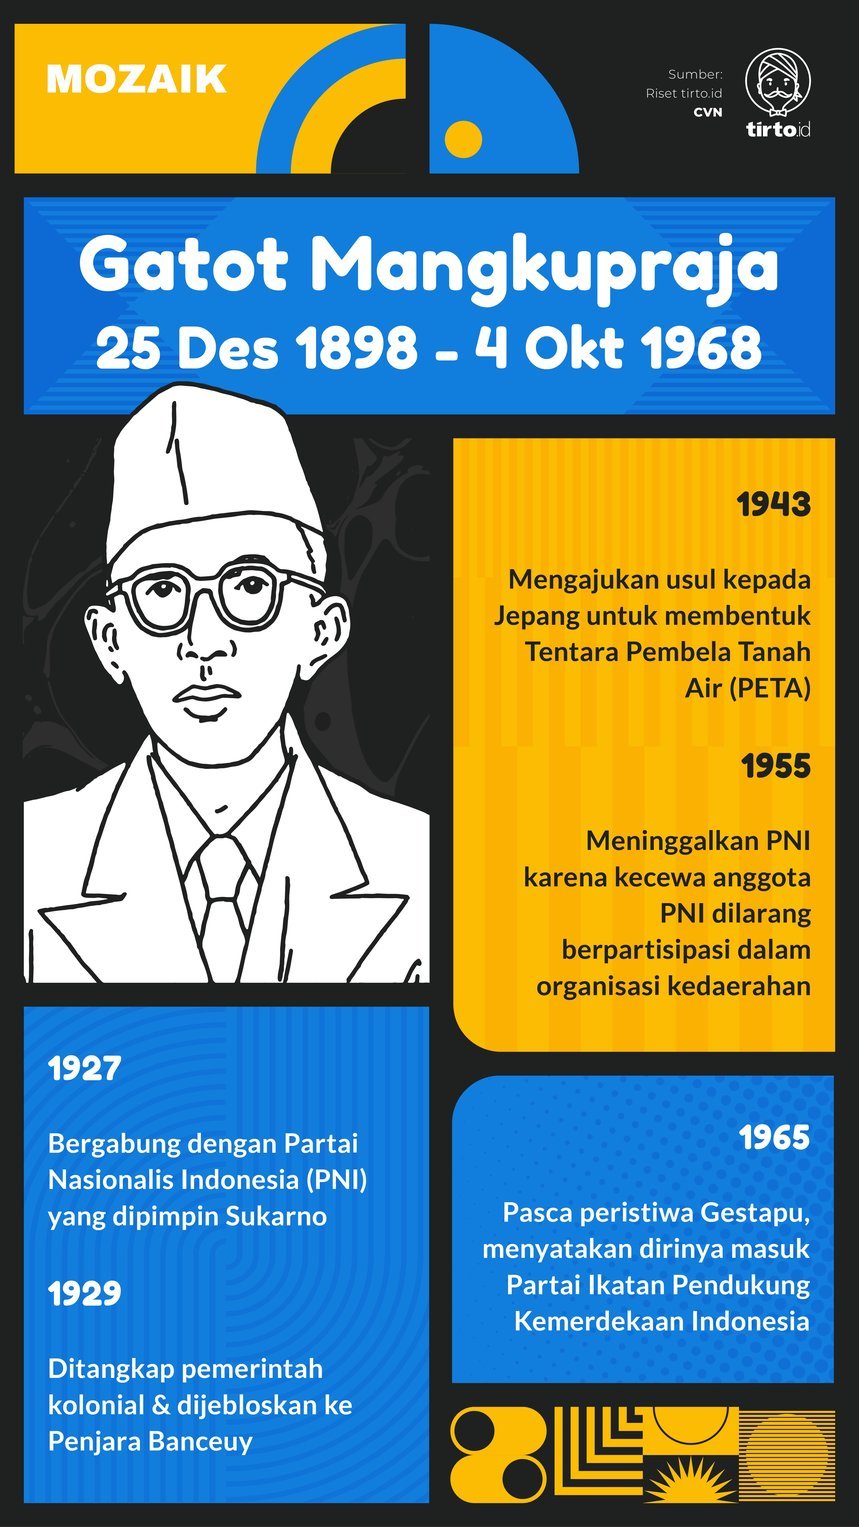 Infografik Mozaik Gatot Mangkupraja